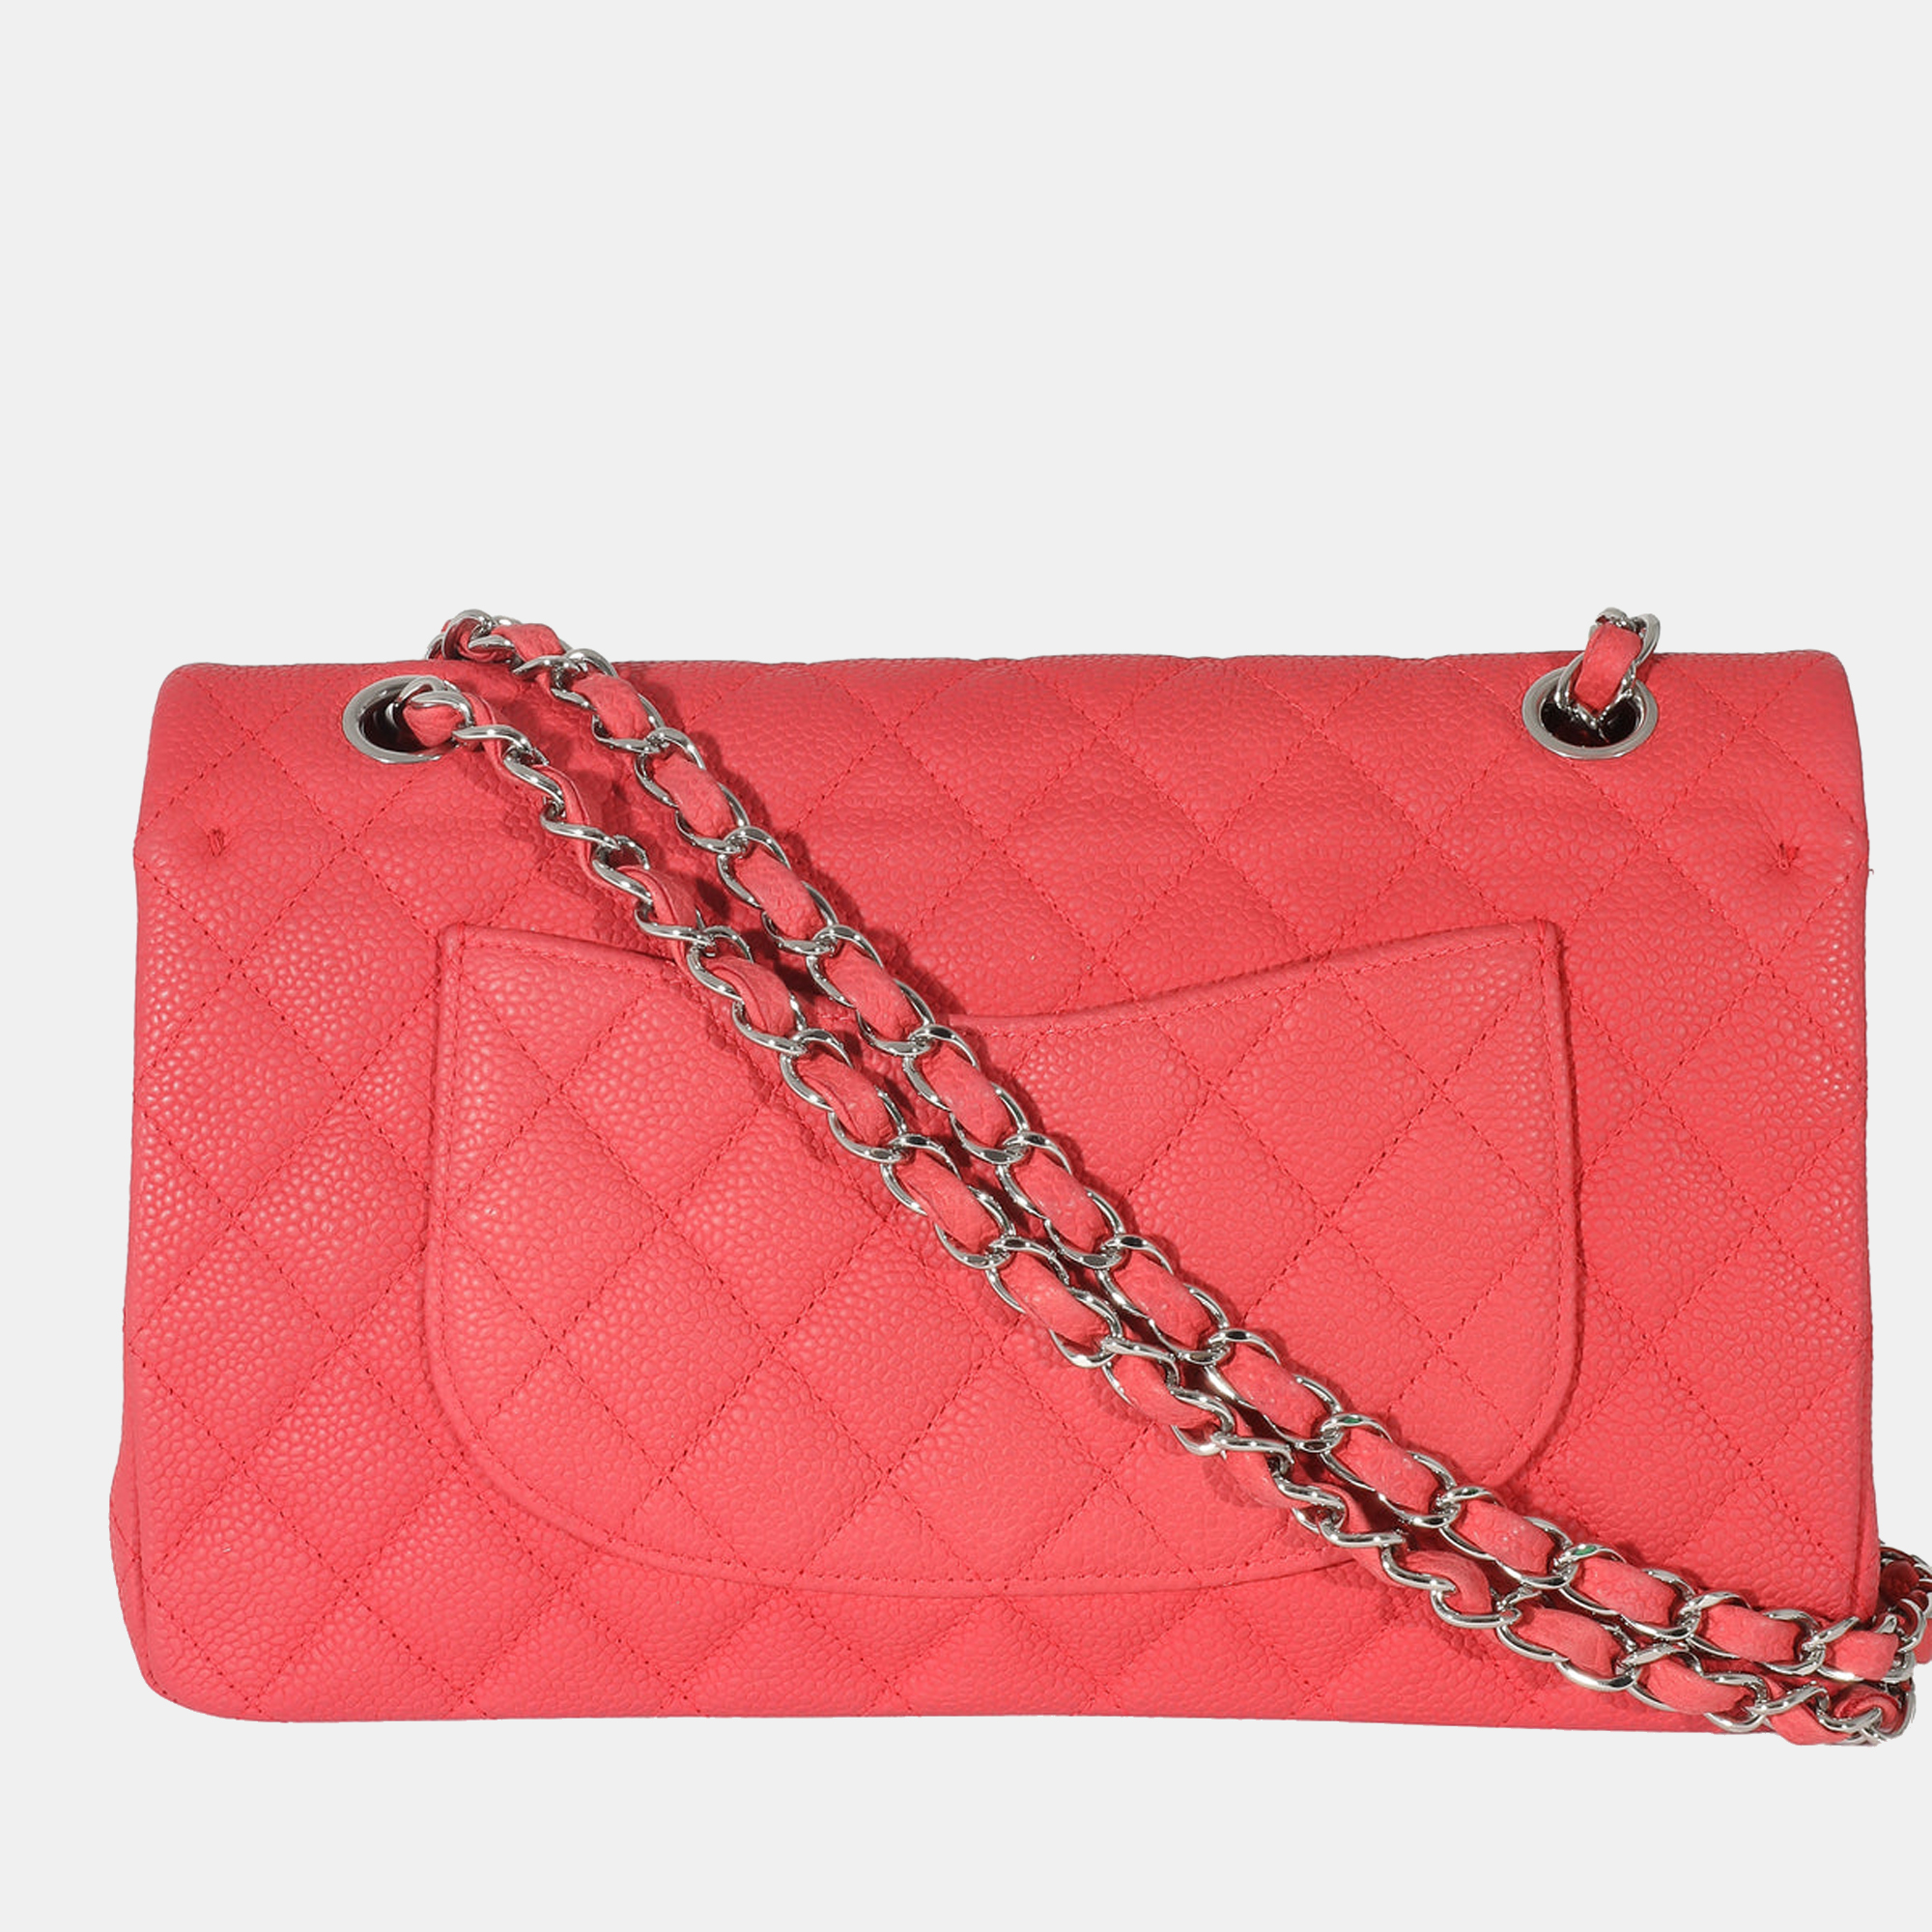 Chanel Red Caviar Medium Classic Double Flap Bag